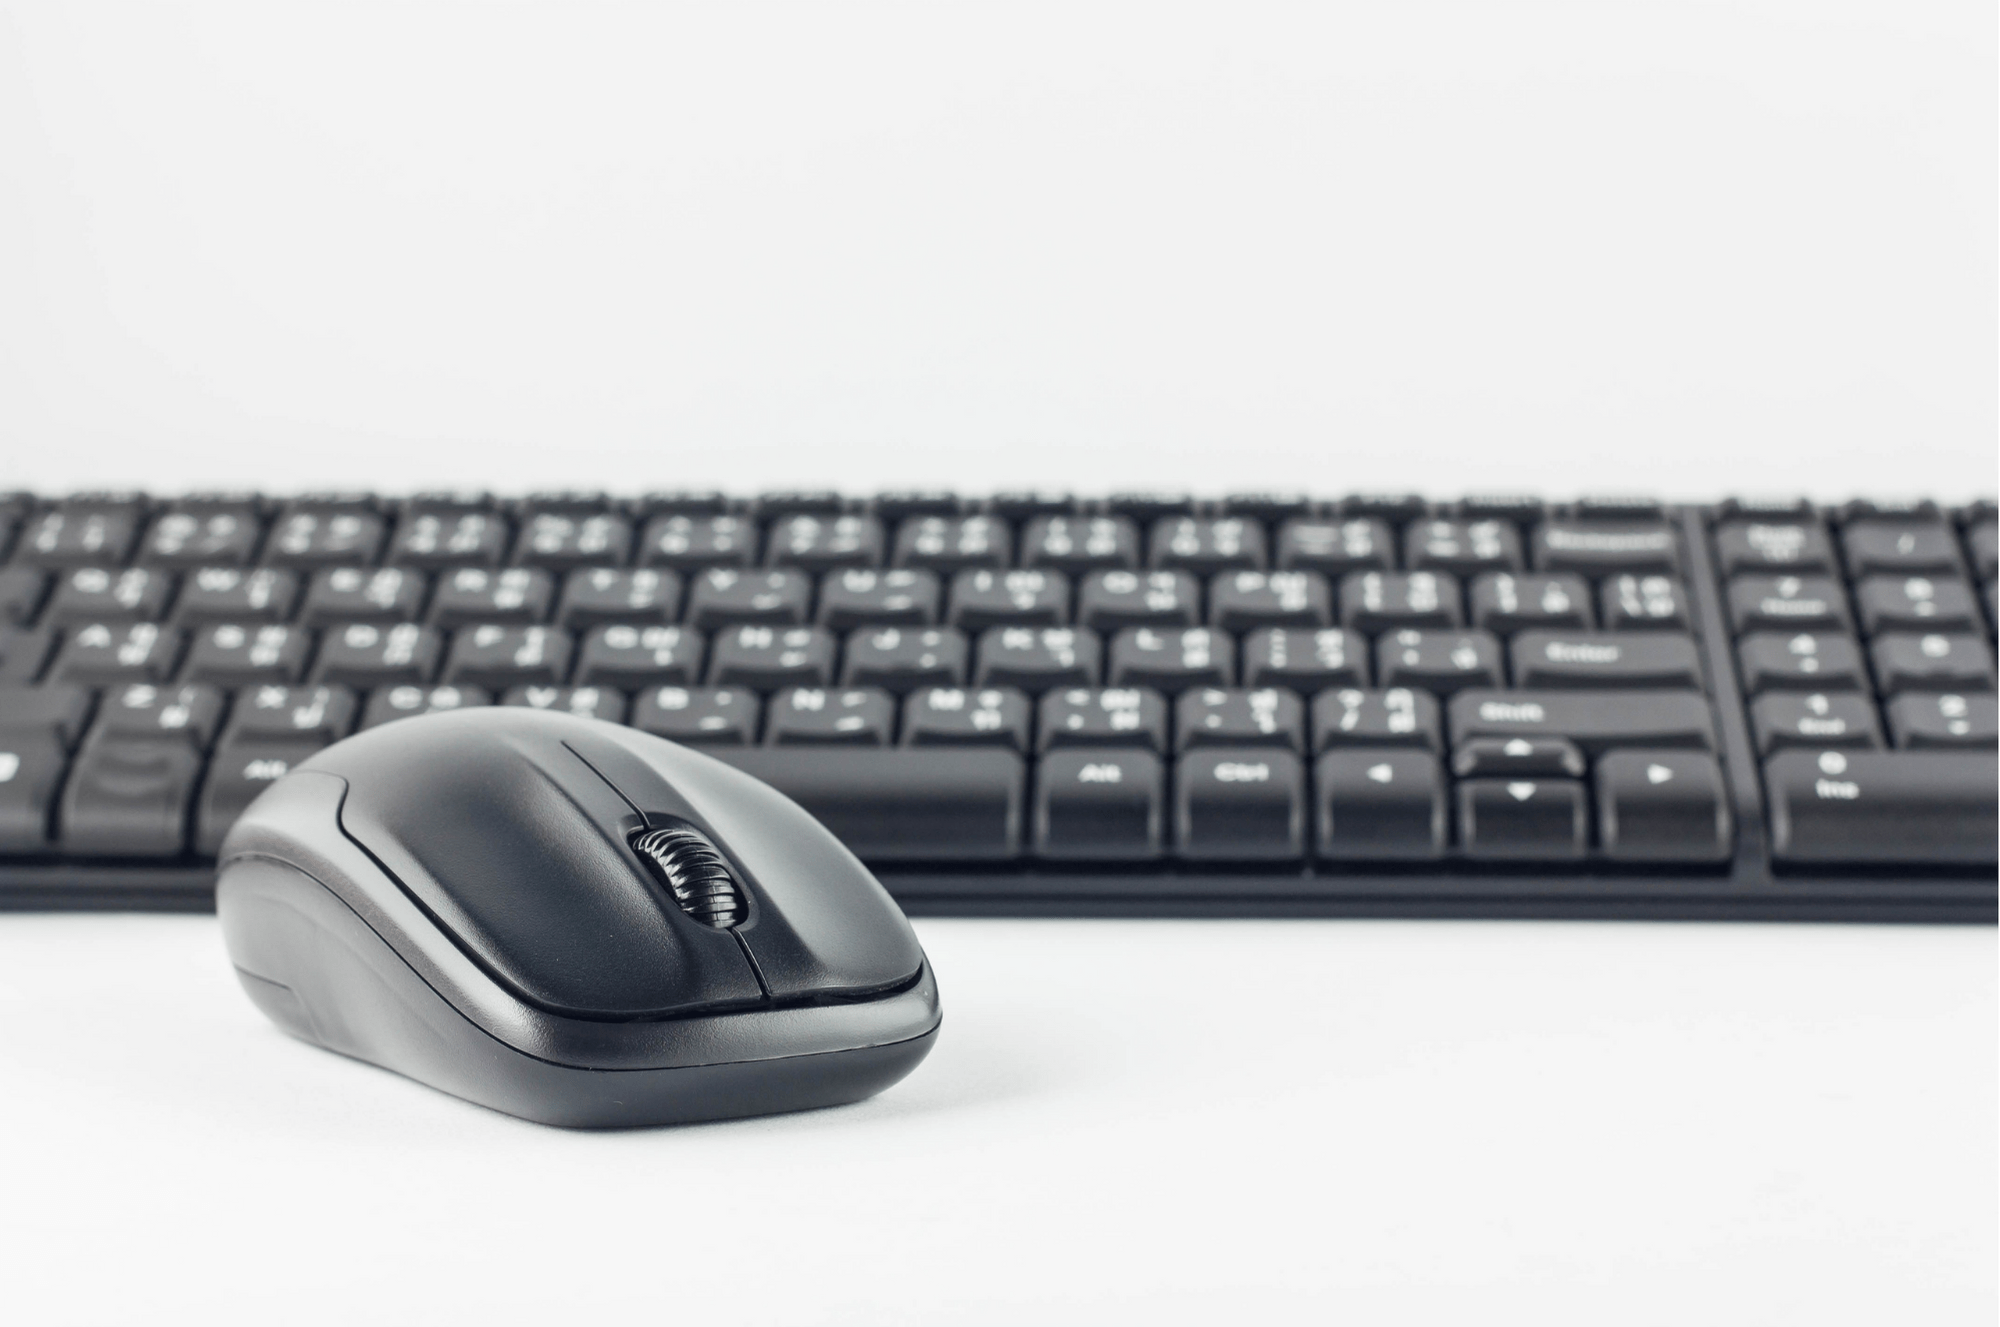 Office Ergonomics – Keyboards & Mice